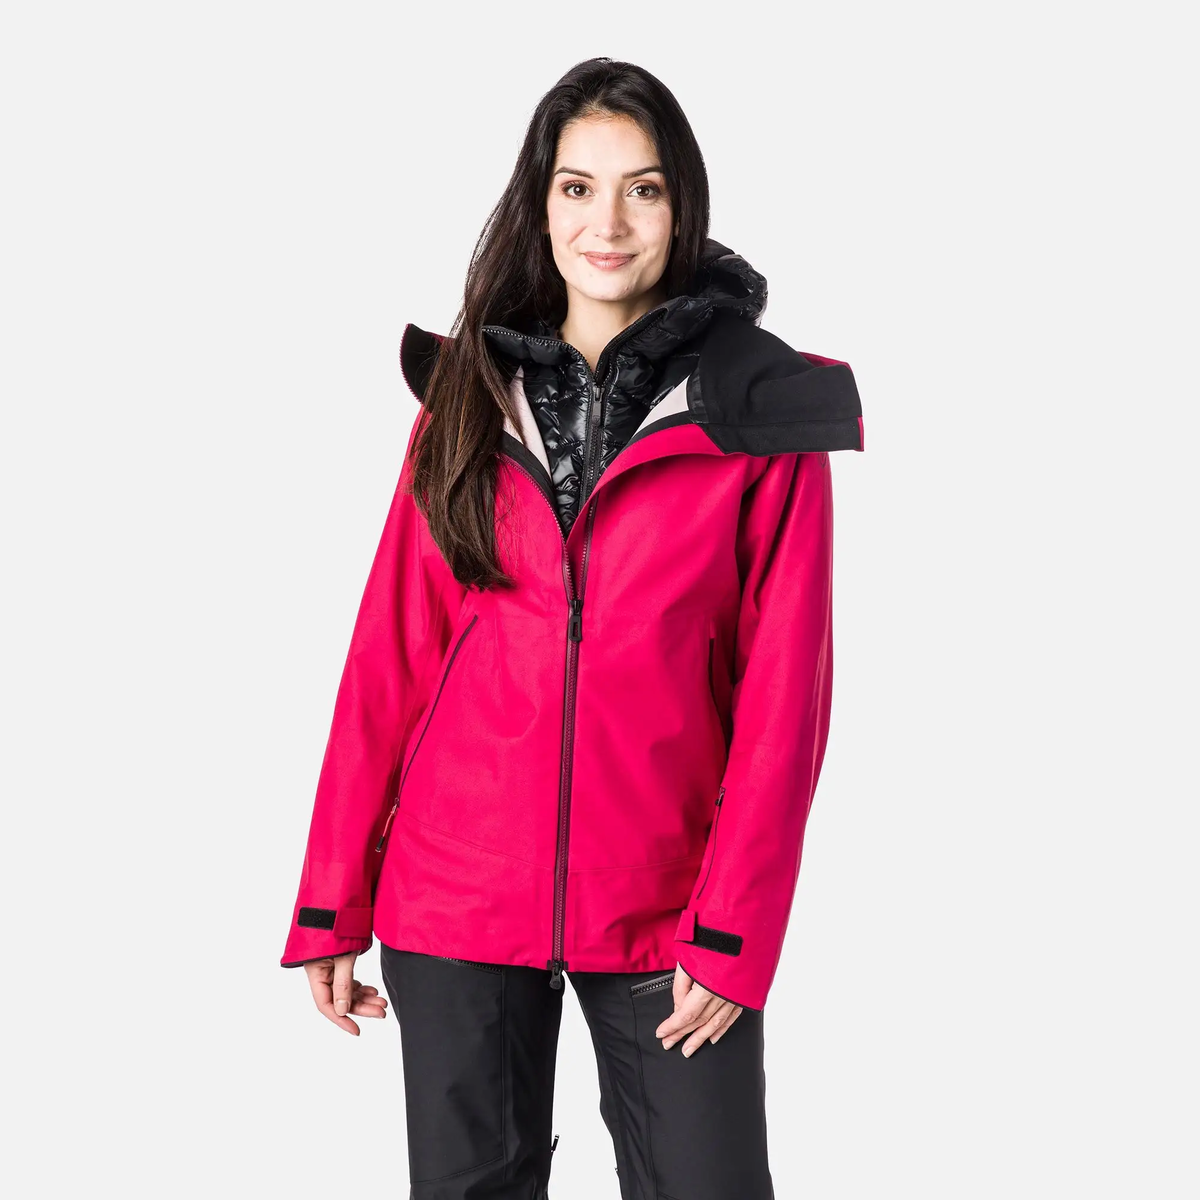 SKPR 3L ski jas roze dames – Snowsuits